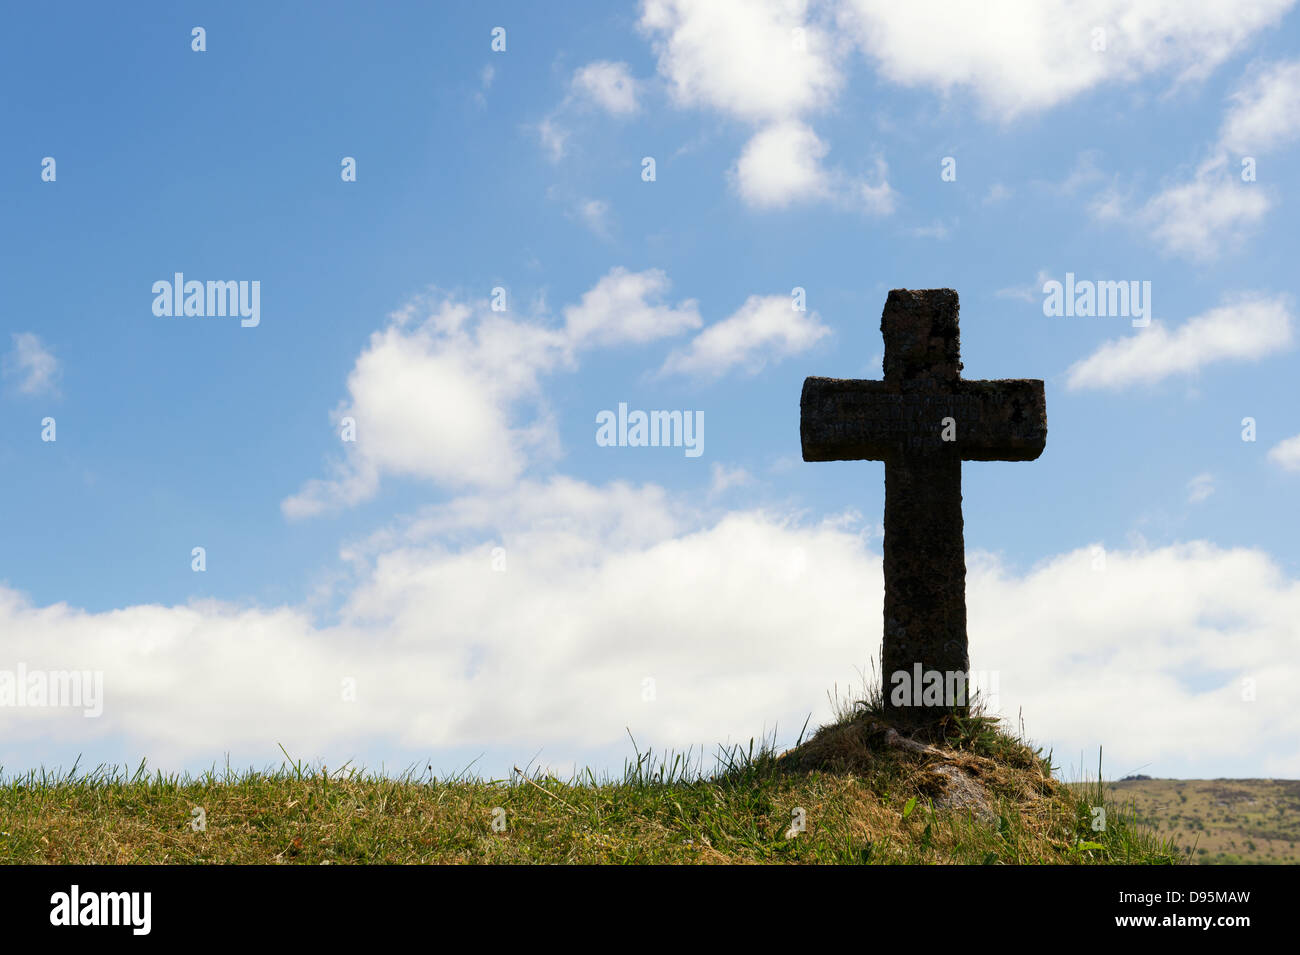 Gravestone cross on a bank of grass. Silhouette. St Pancras Church. Widecombe in the Moor. Dartmoor, Devon, England Stock Photo